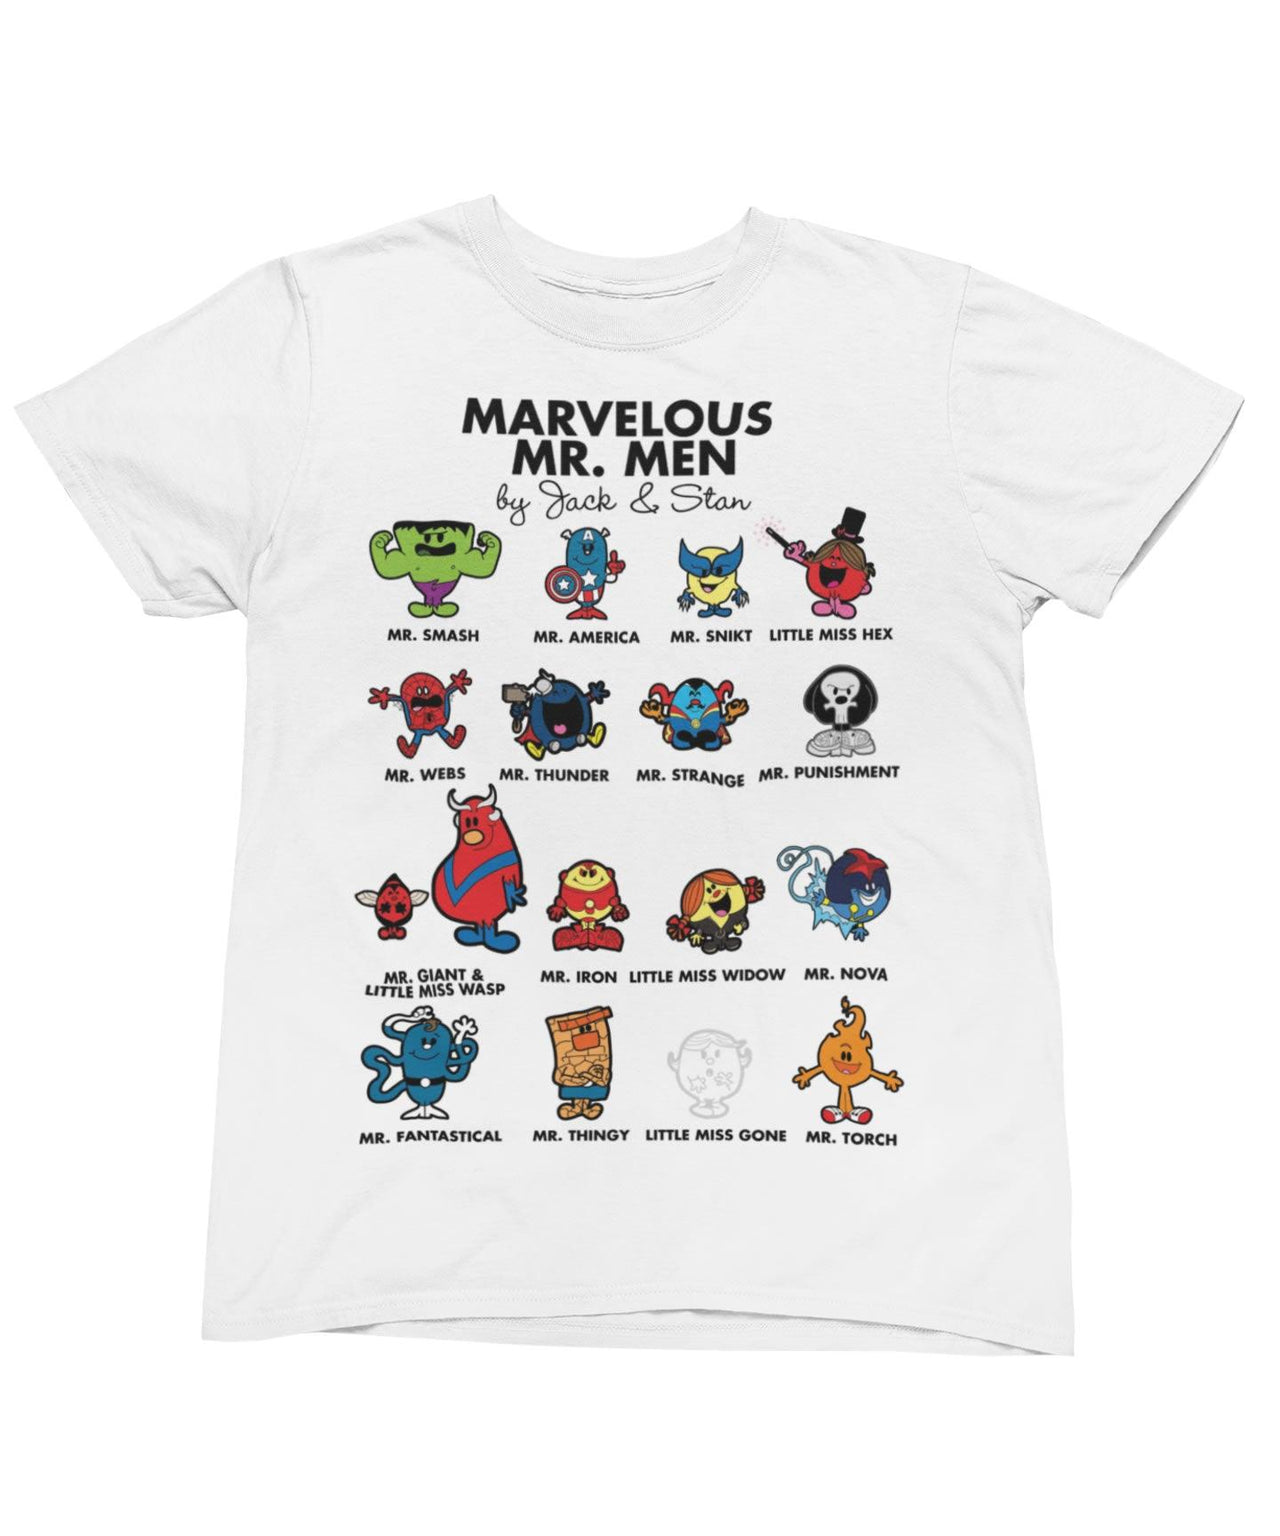 Top Notchy Marvelous Mr Men Men's/Unisex Graphic T-Shirt For Men 8Ball